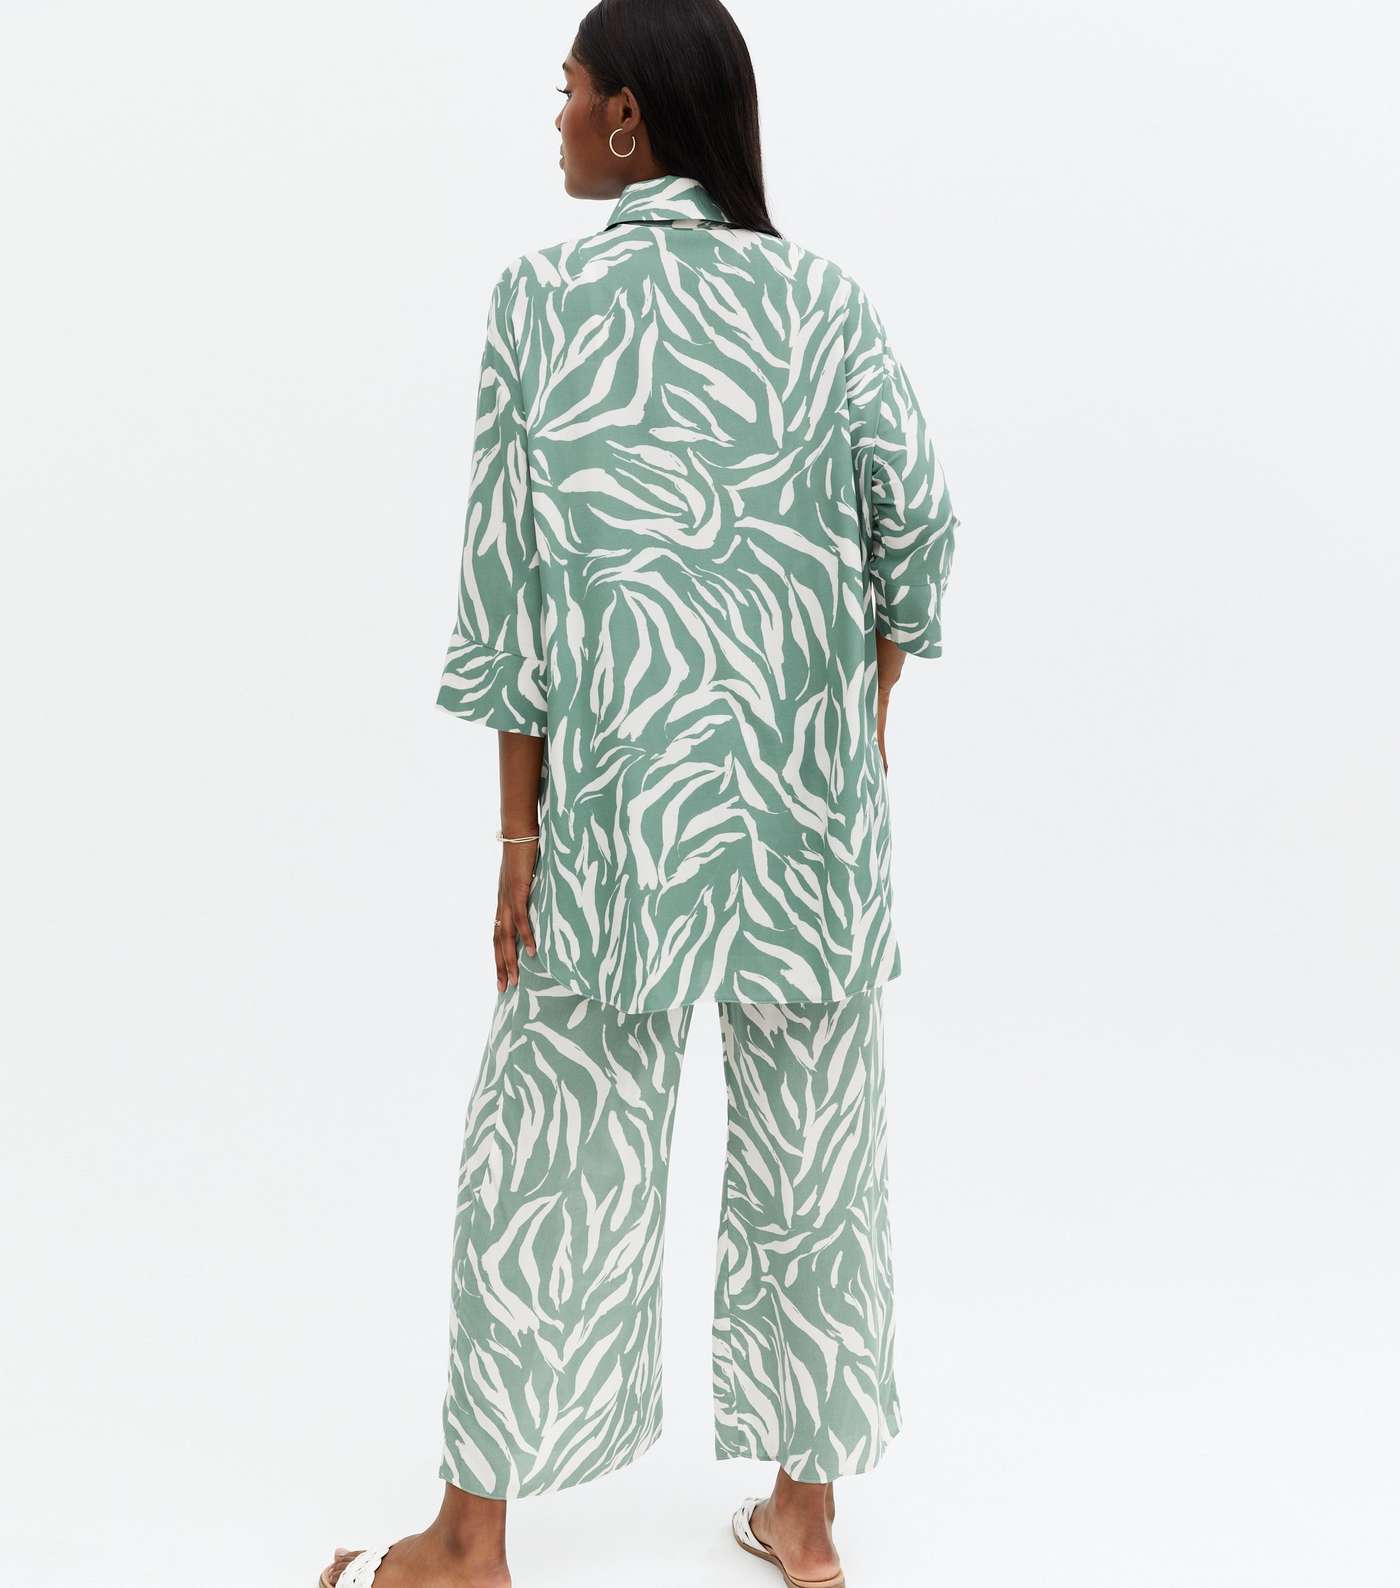 Green Zebra Print Long Oversized Shirt Image 4